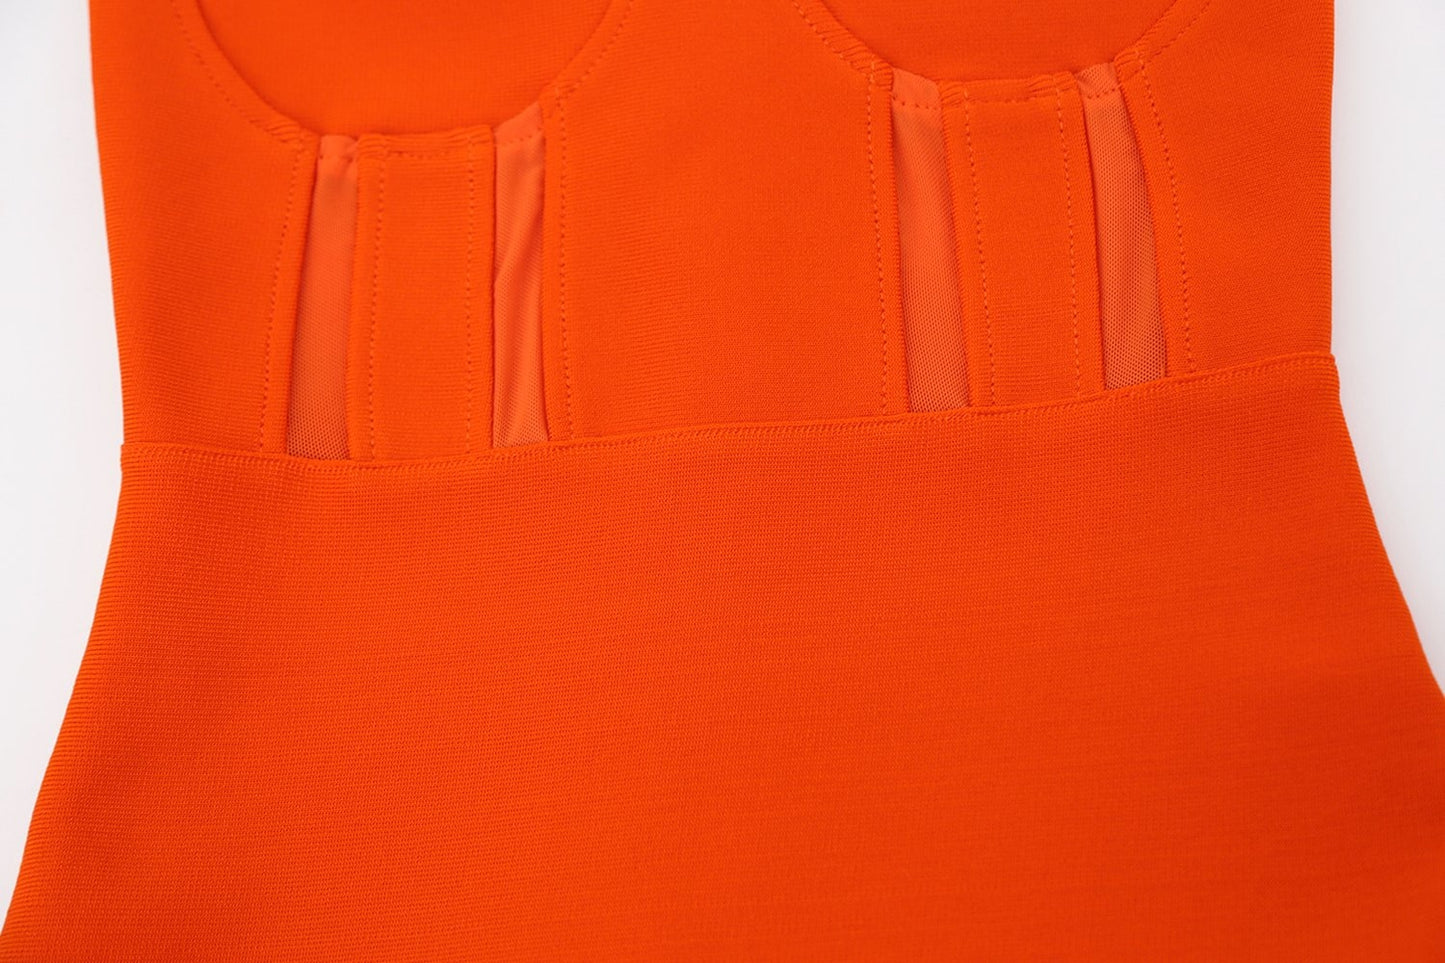 Winnal Womens Orange Ruffles Strappy V Neck Side Split Bodycon Bandage Dress Clubwear